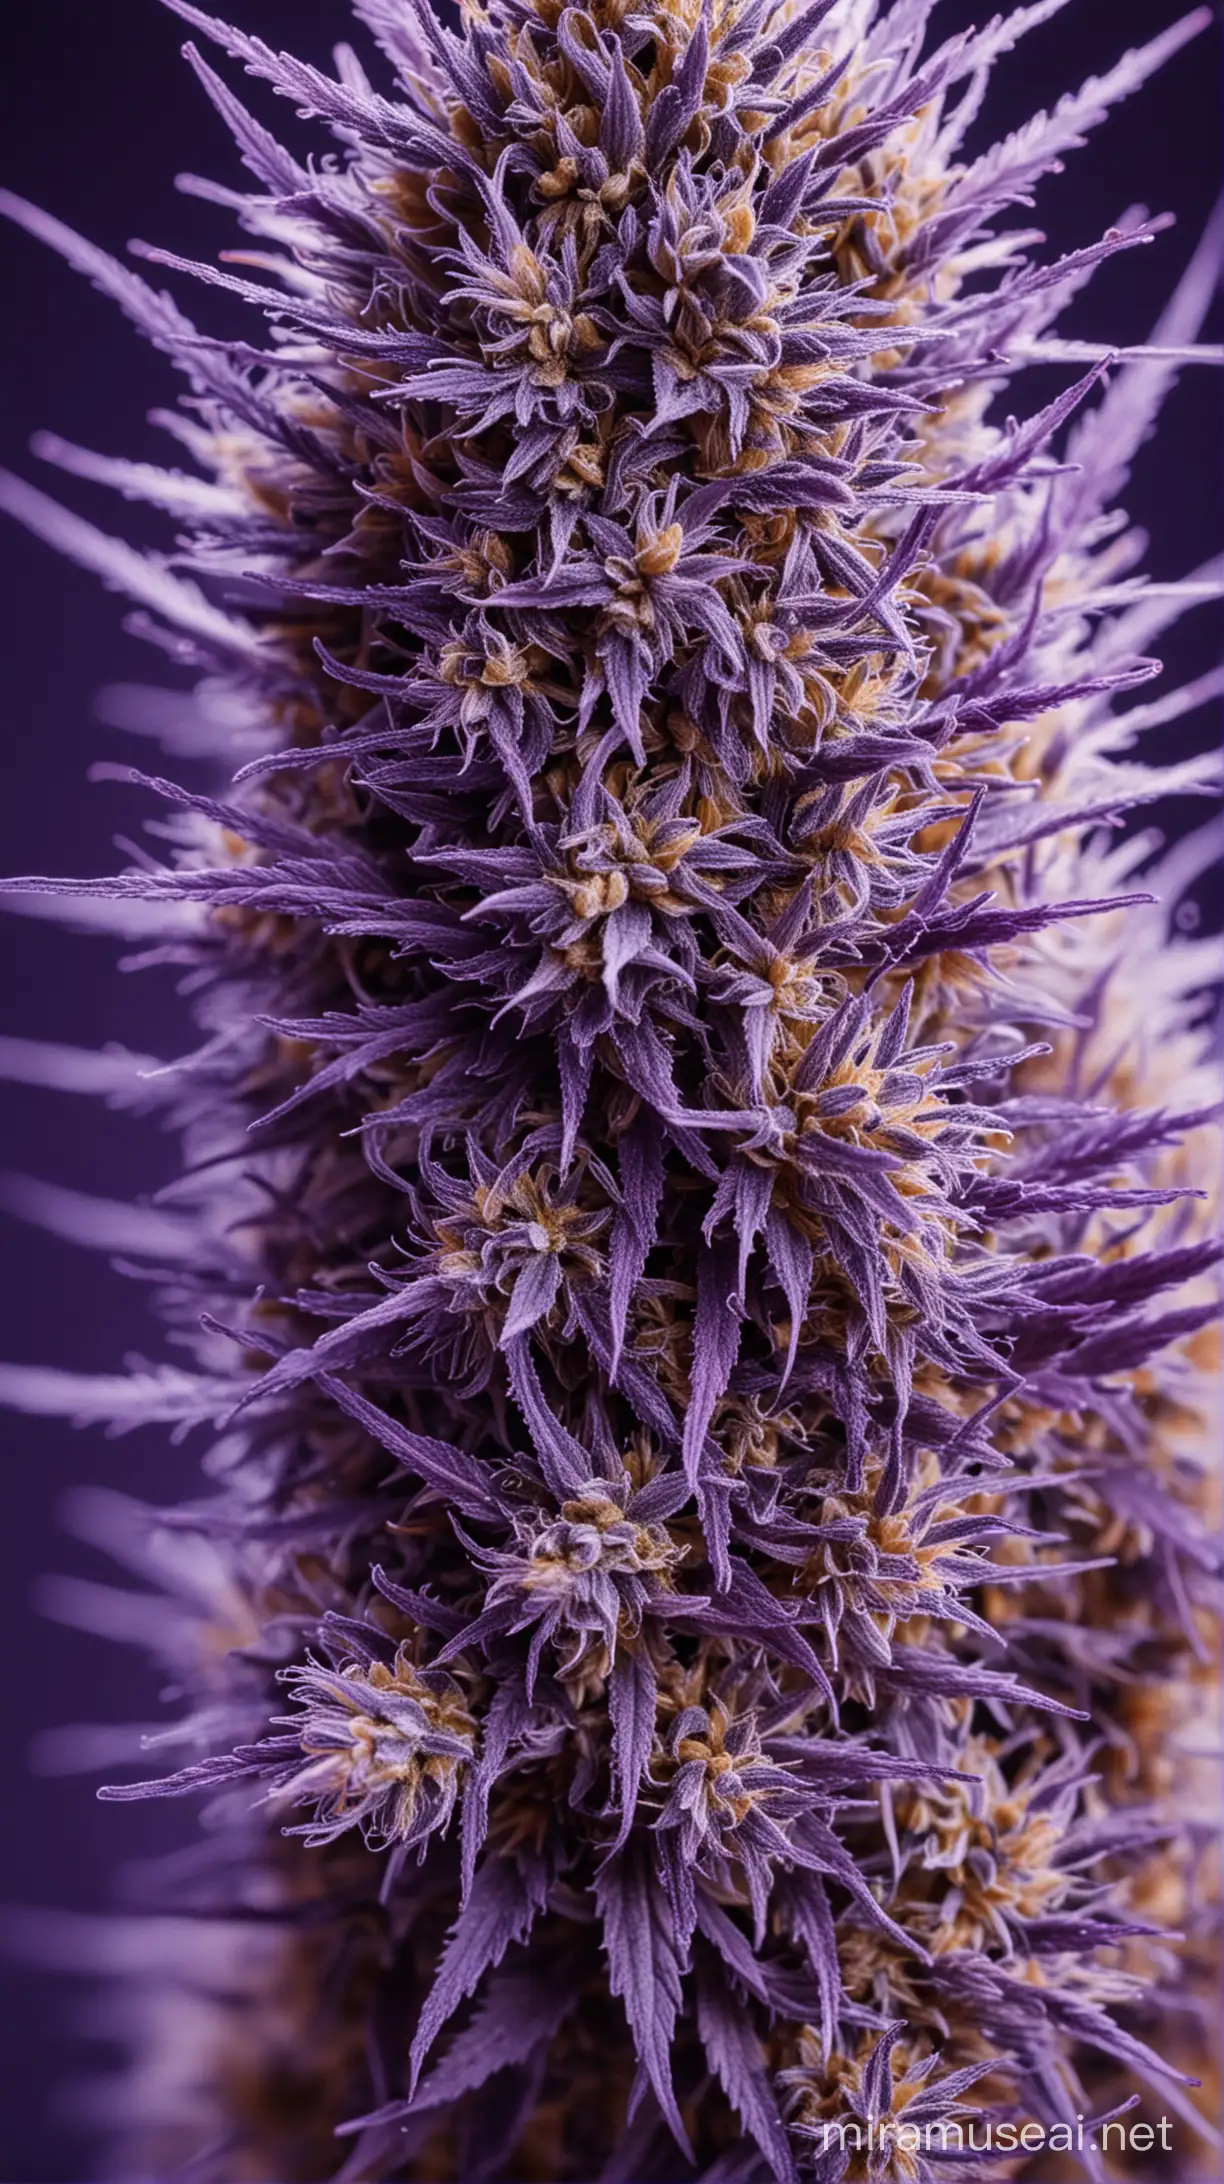 Stunning Macro Shot of Purple Hued Resinous Cannabis